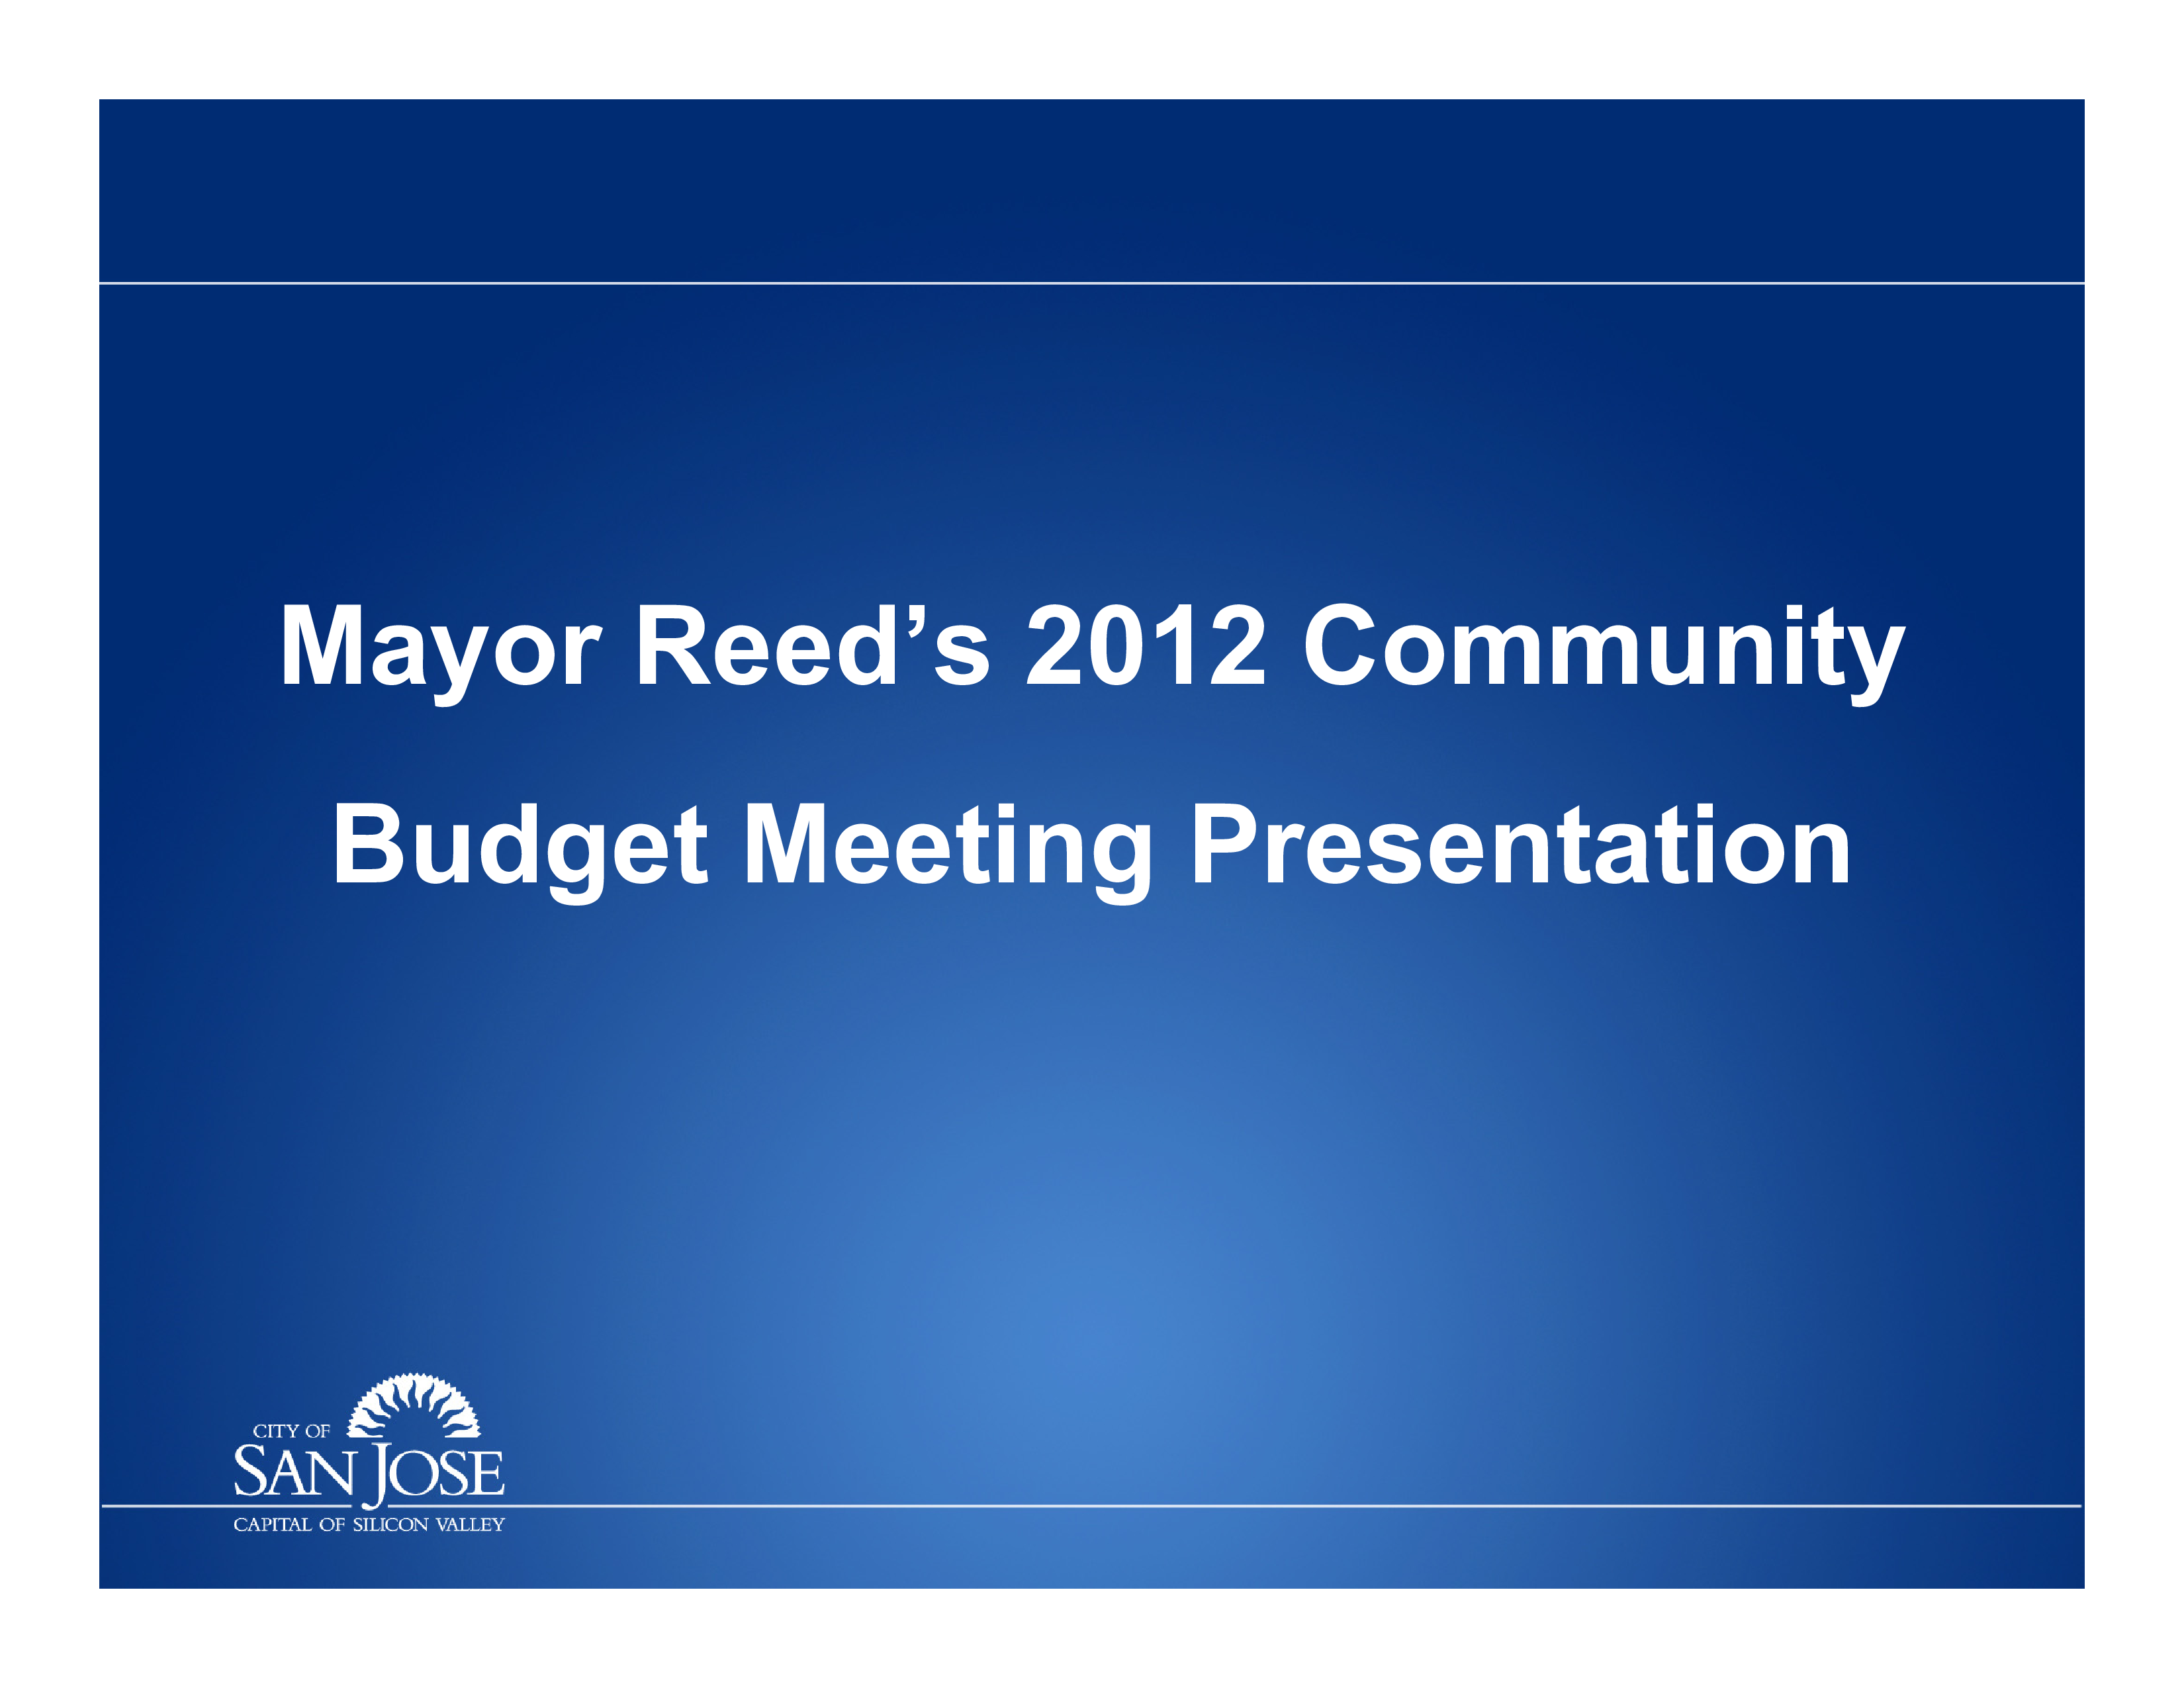 budget meeting presentation plantilla imagen principal